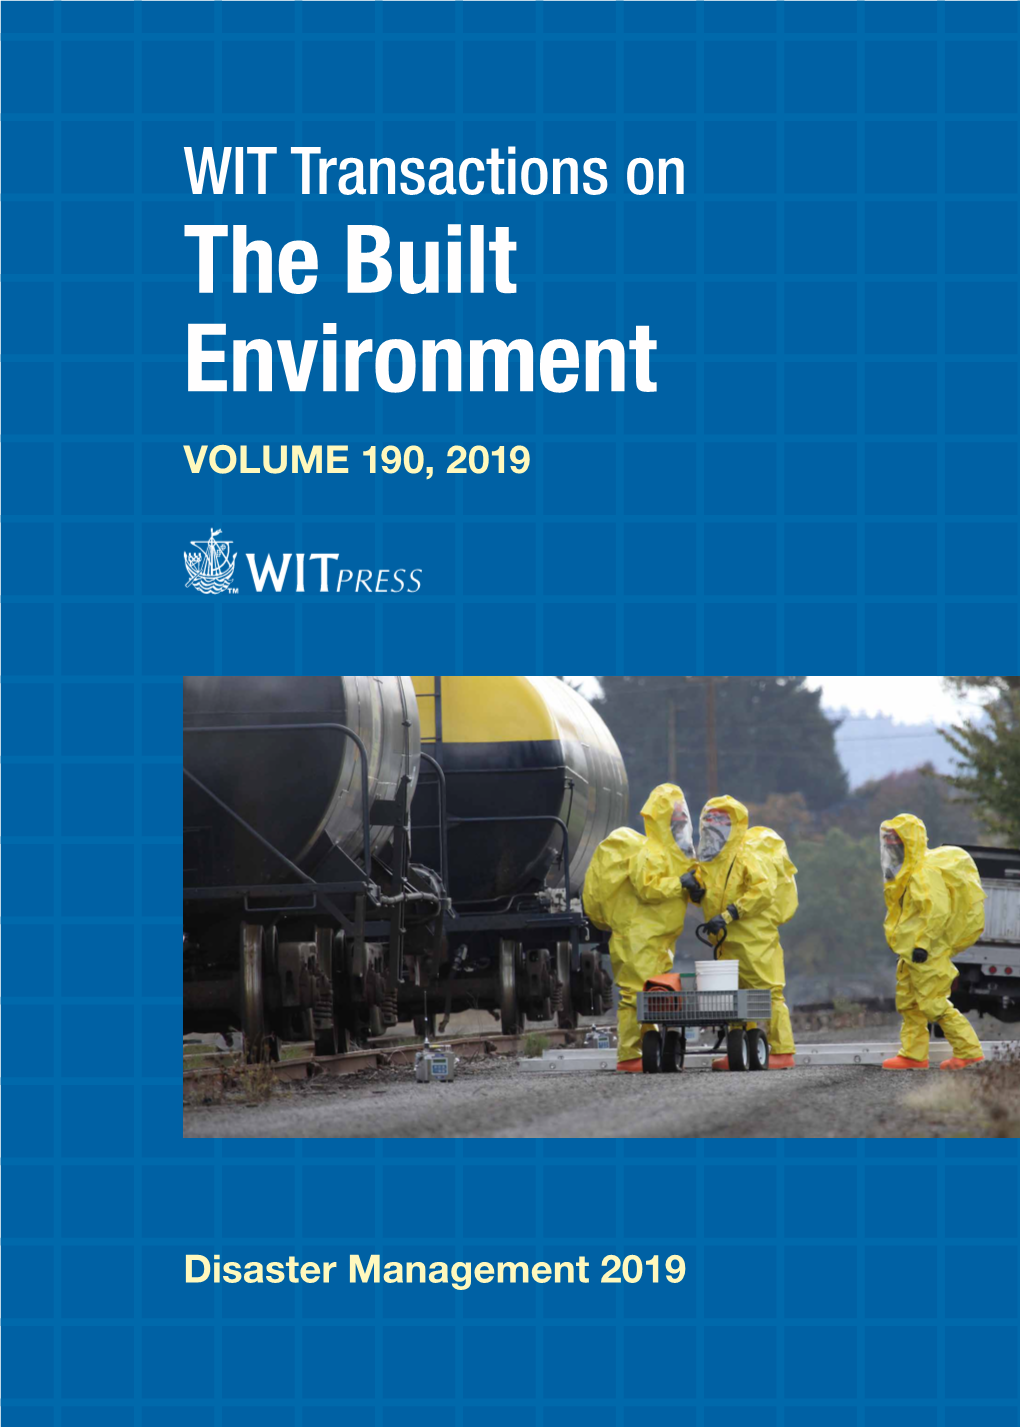 The Built Environment VOLUME 190, 2019